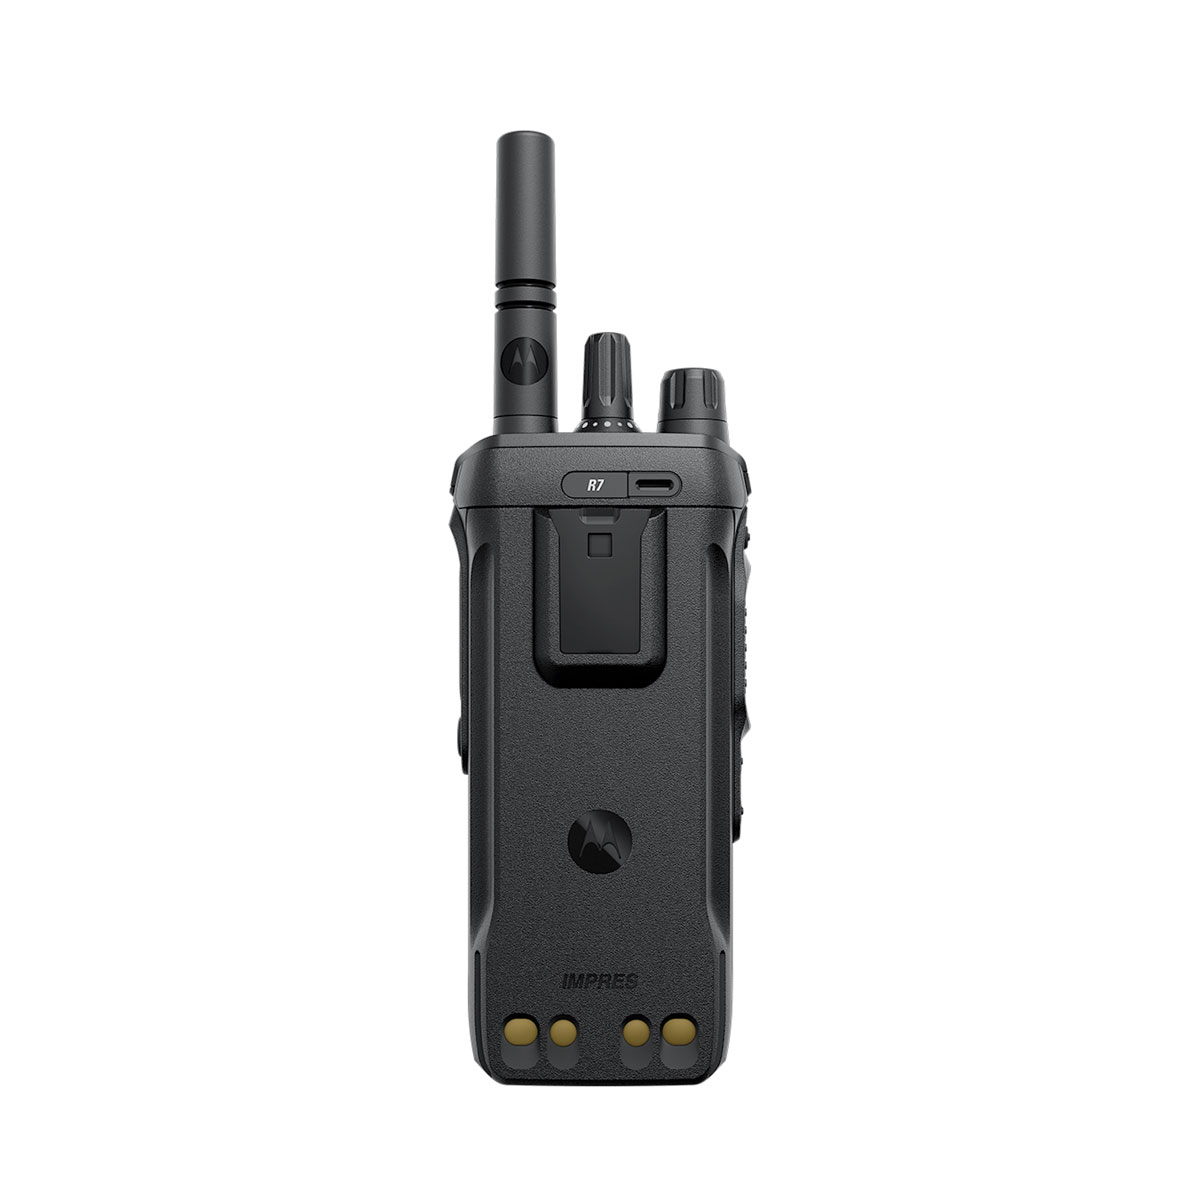 Portofoon Motorola R7 Full Keypad UHF Ohne Ladegerät Hinten